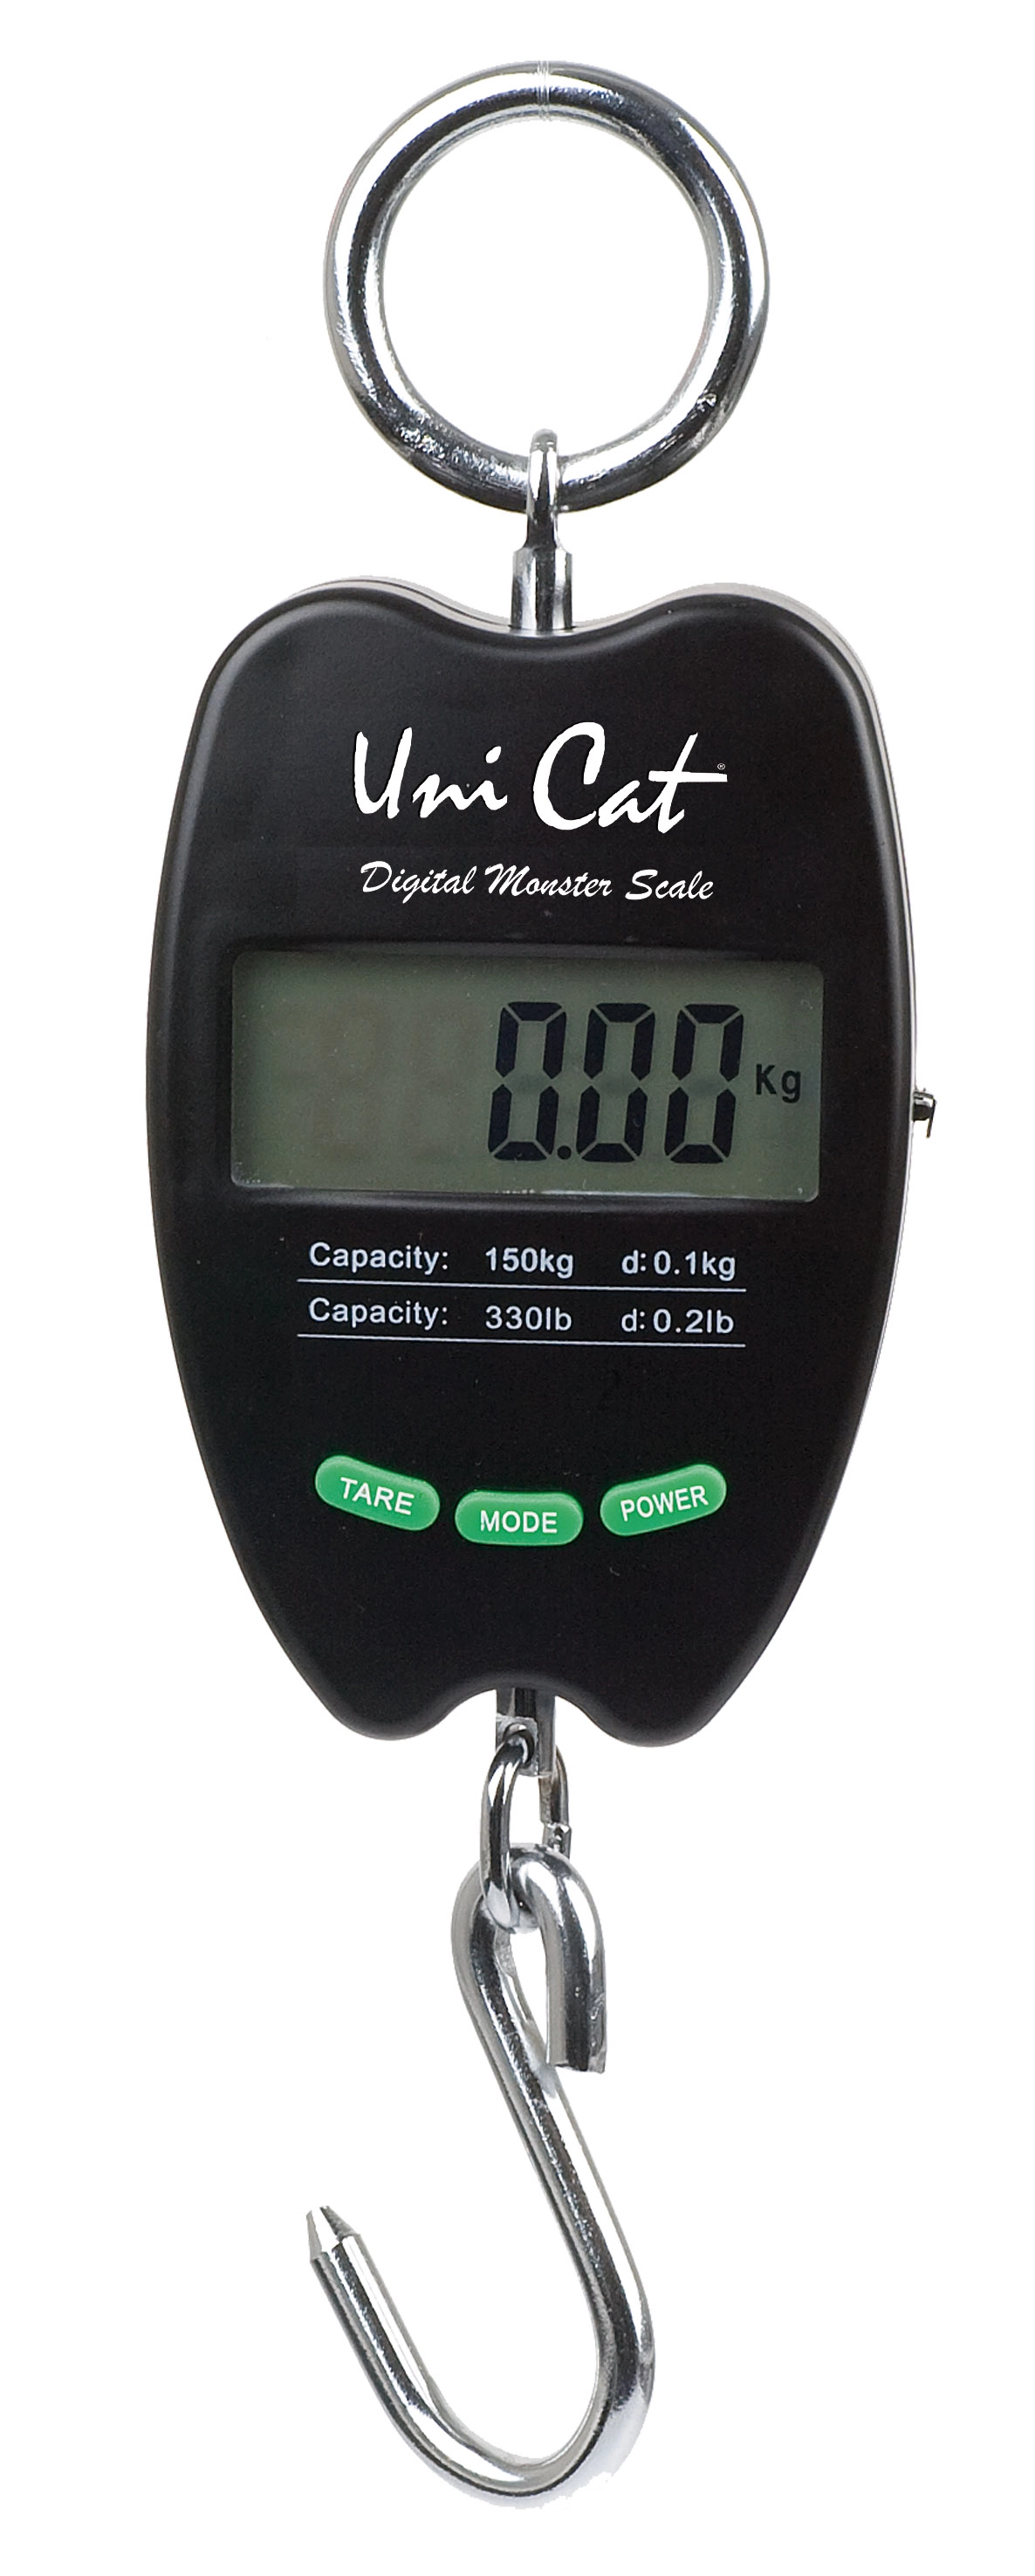 Uni Cat Digital Monster Scale 150 kg